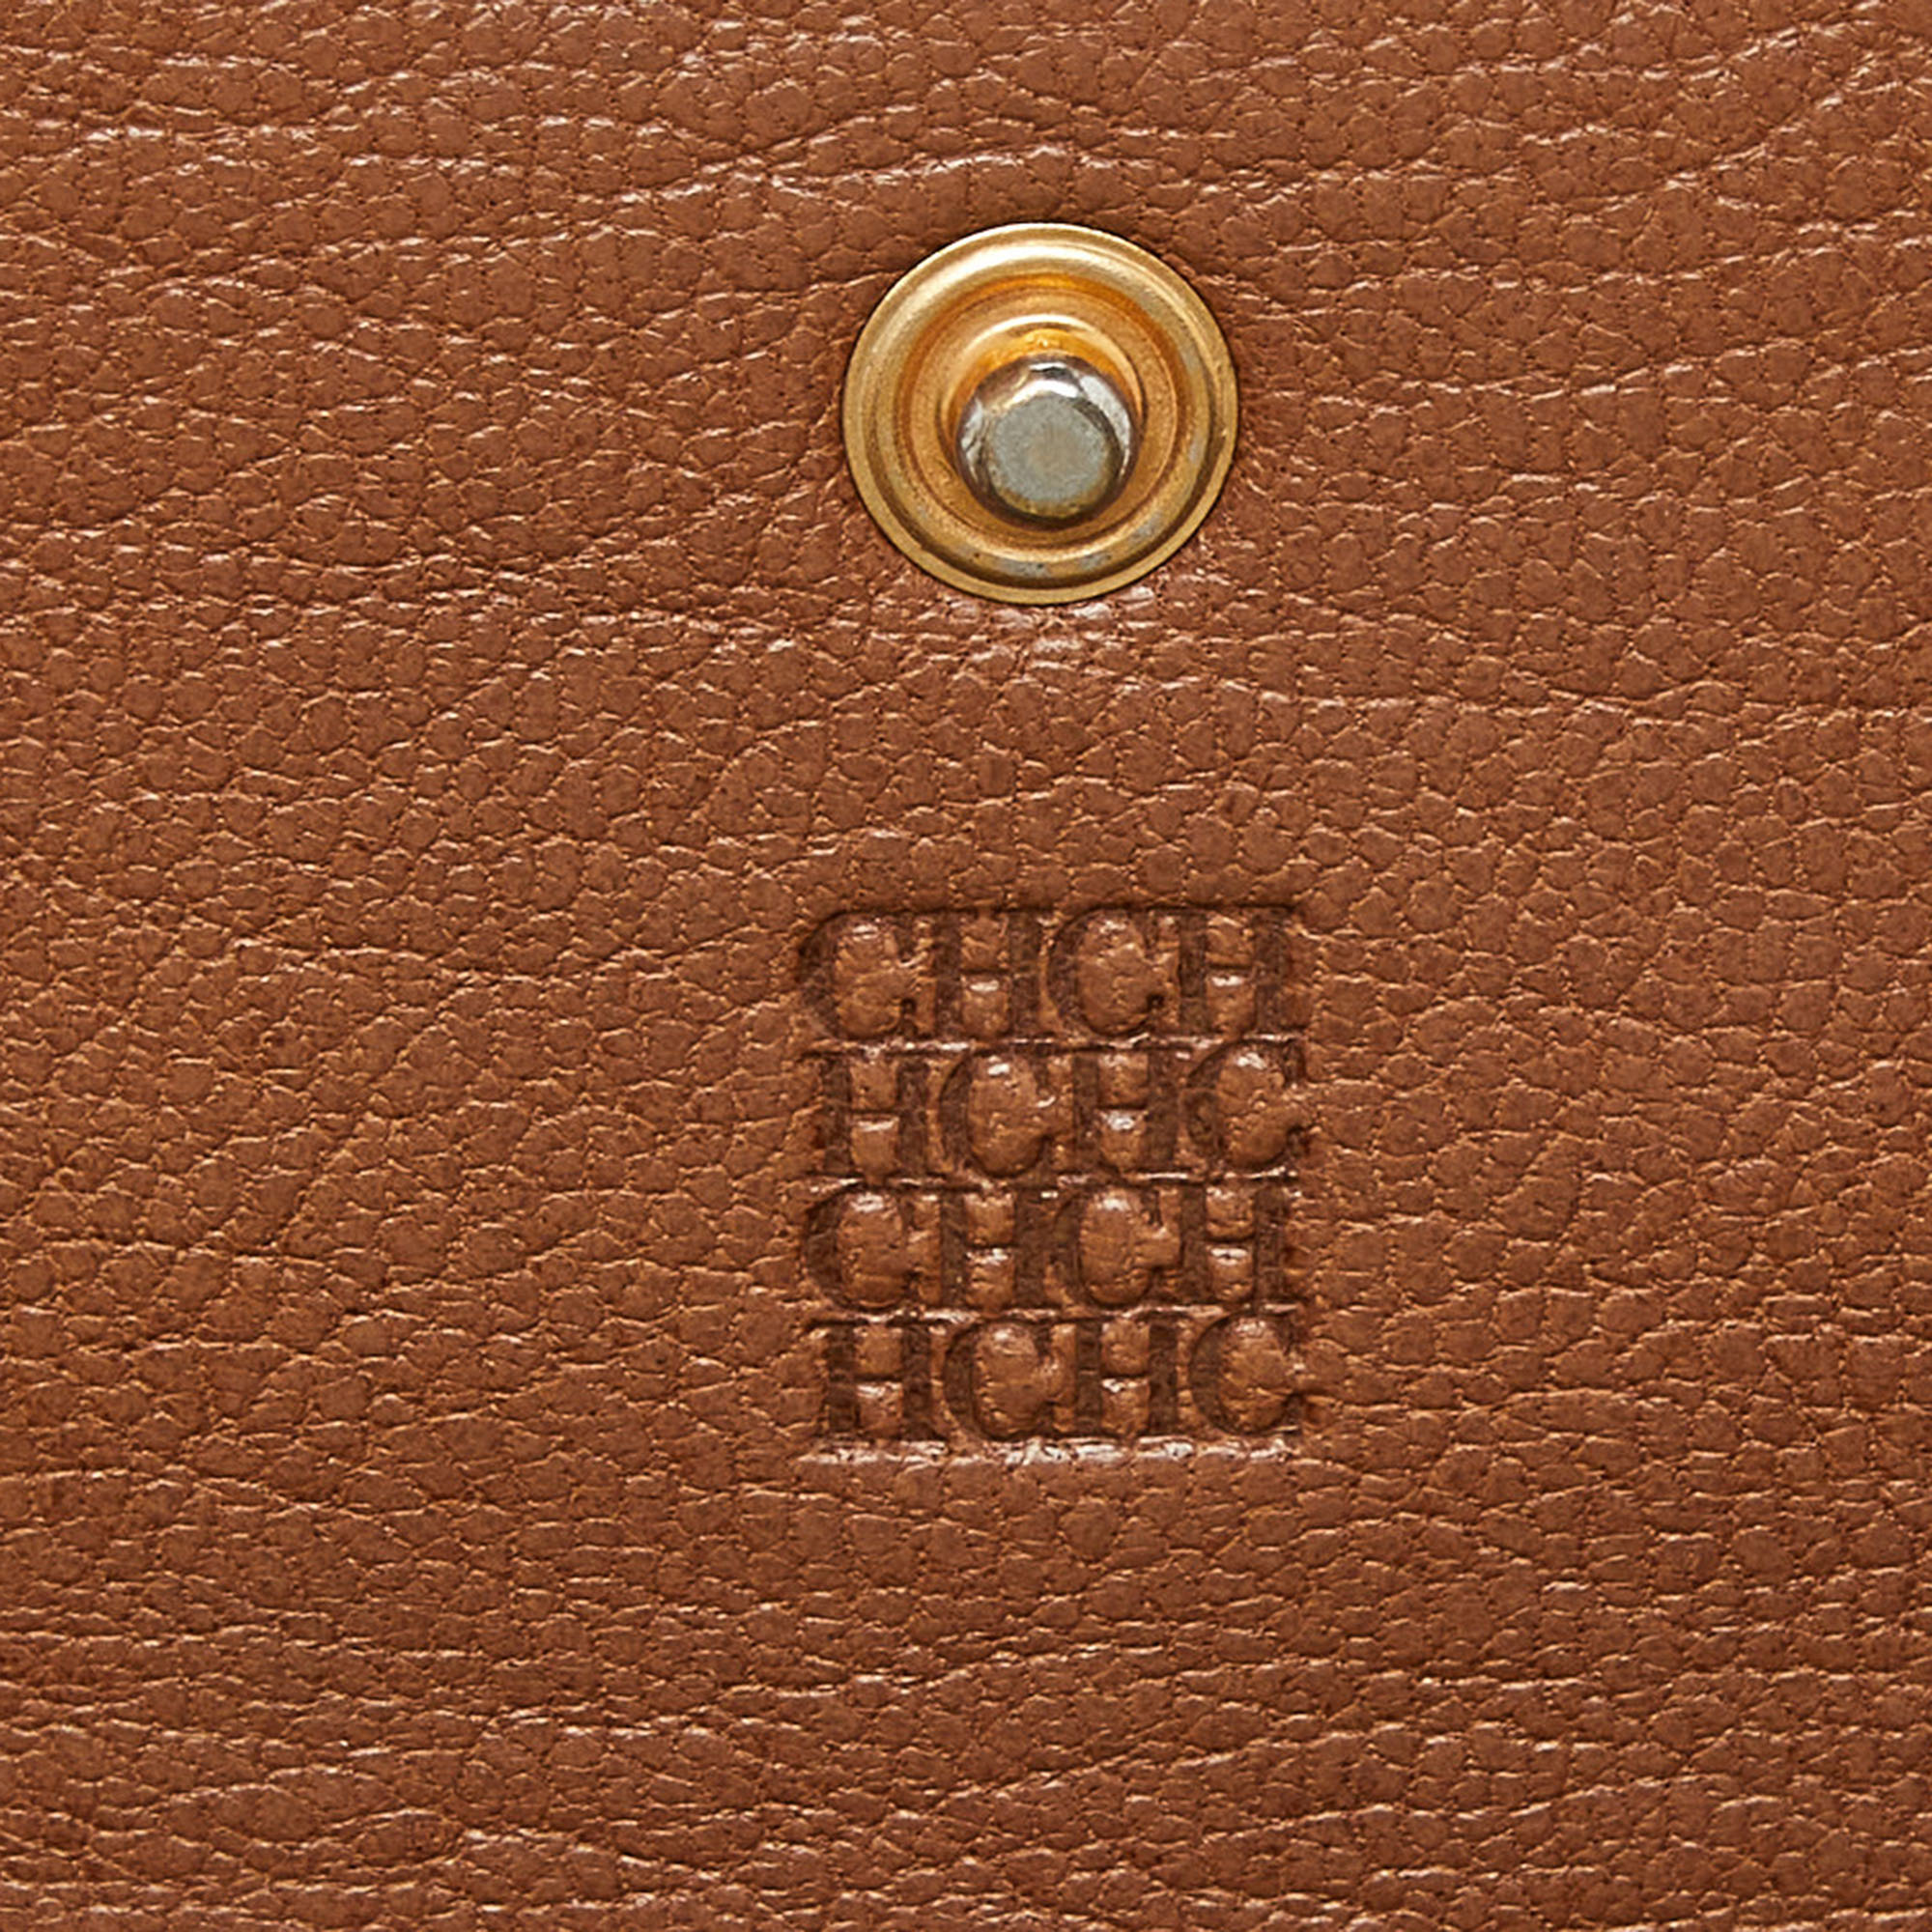 CH Carolina Herrera Brown Leather Monogram Continental Wallet